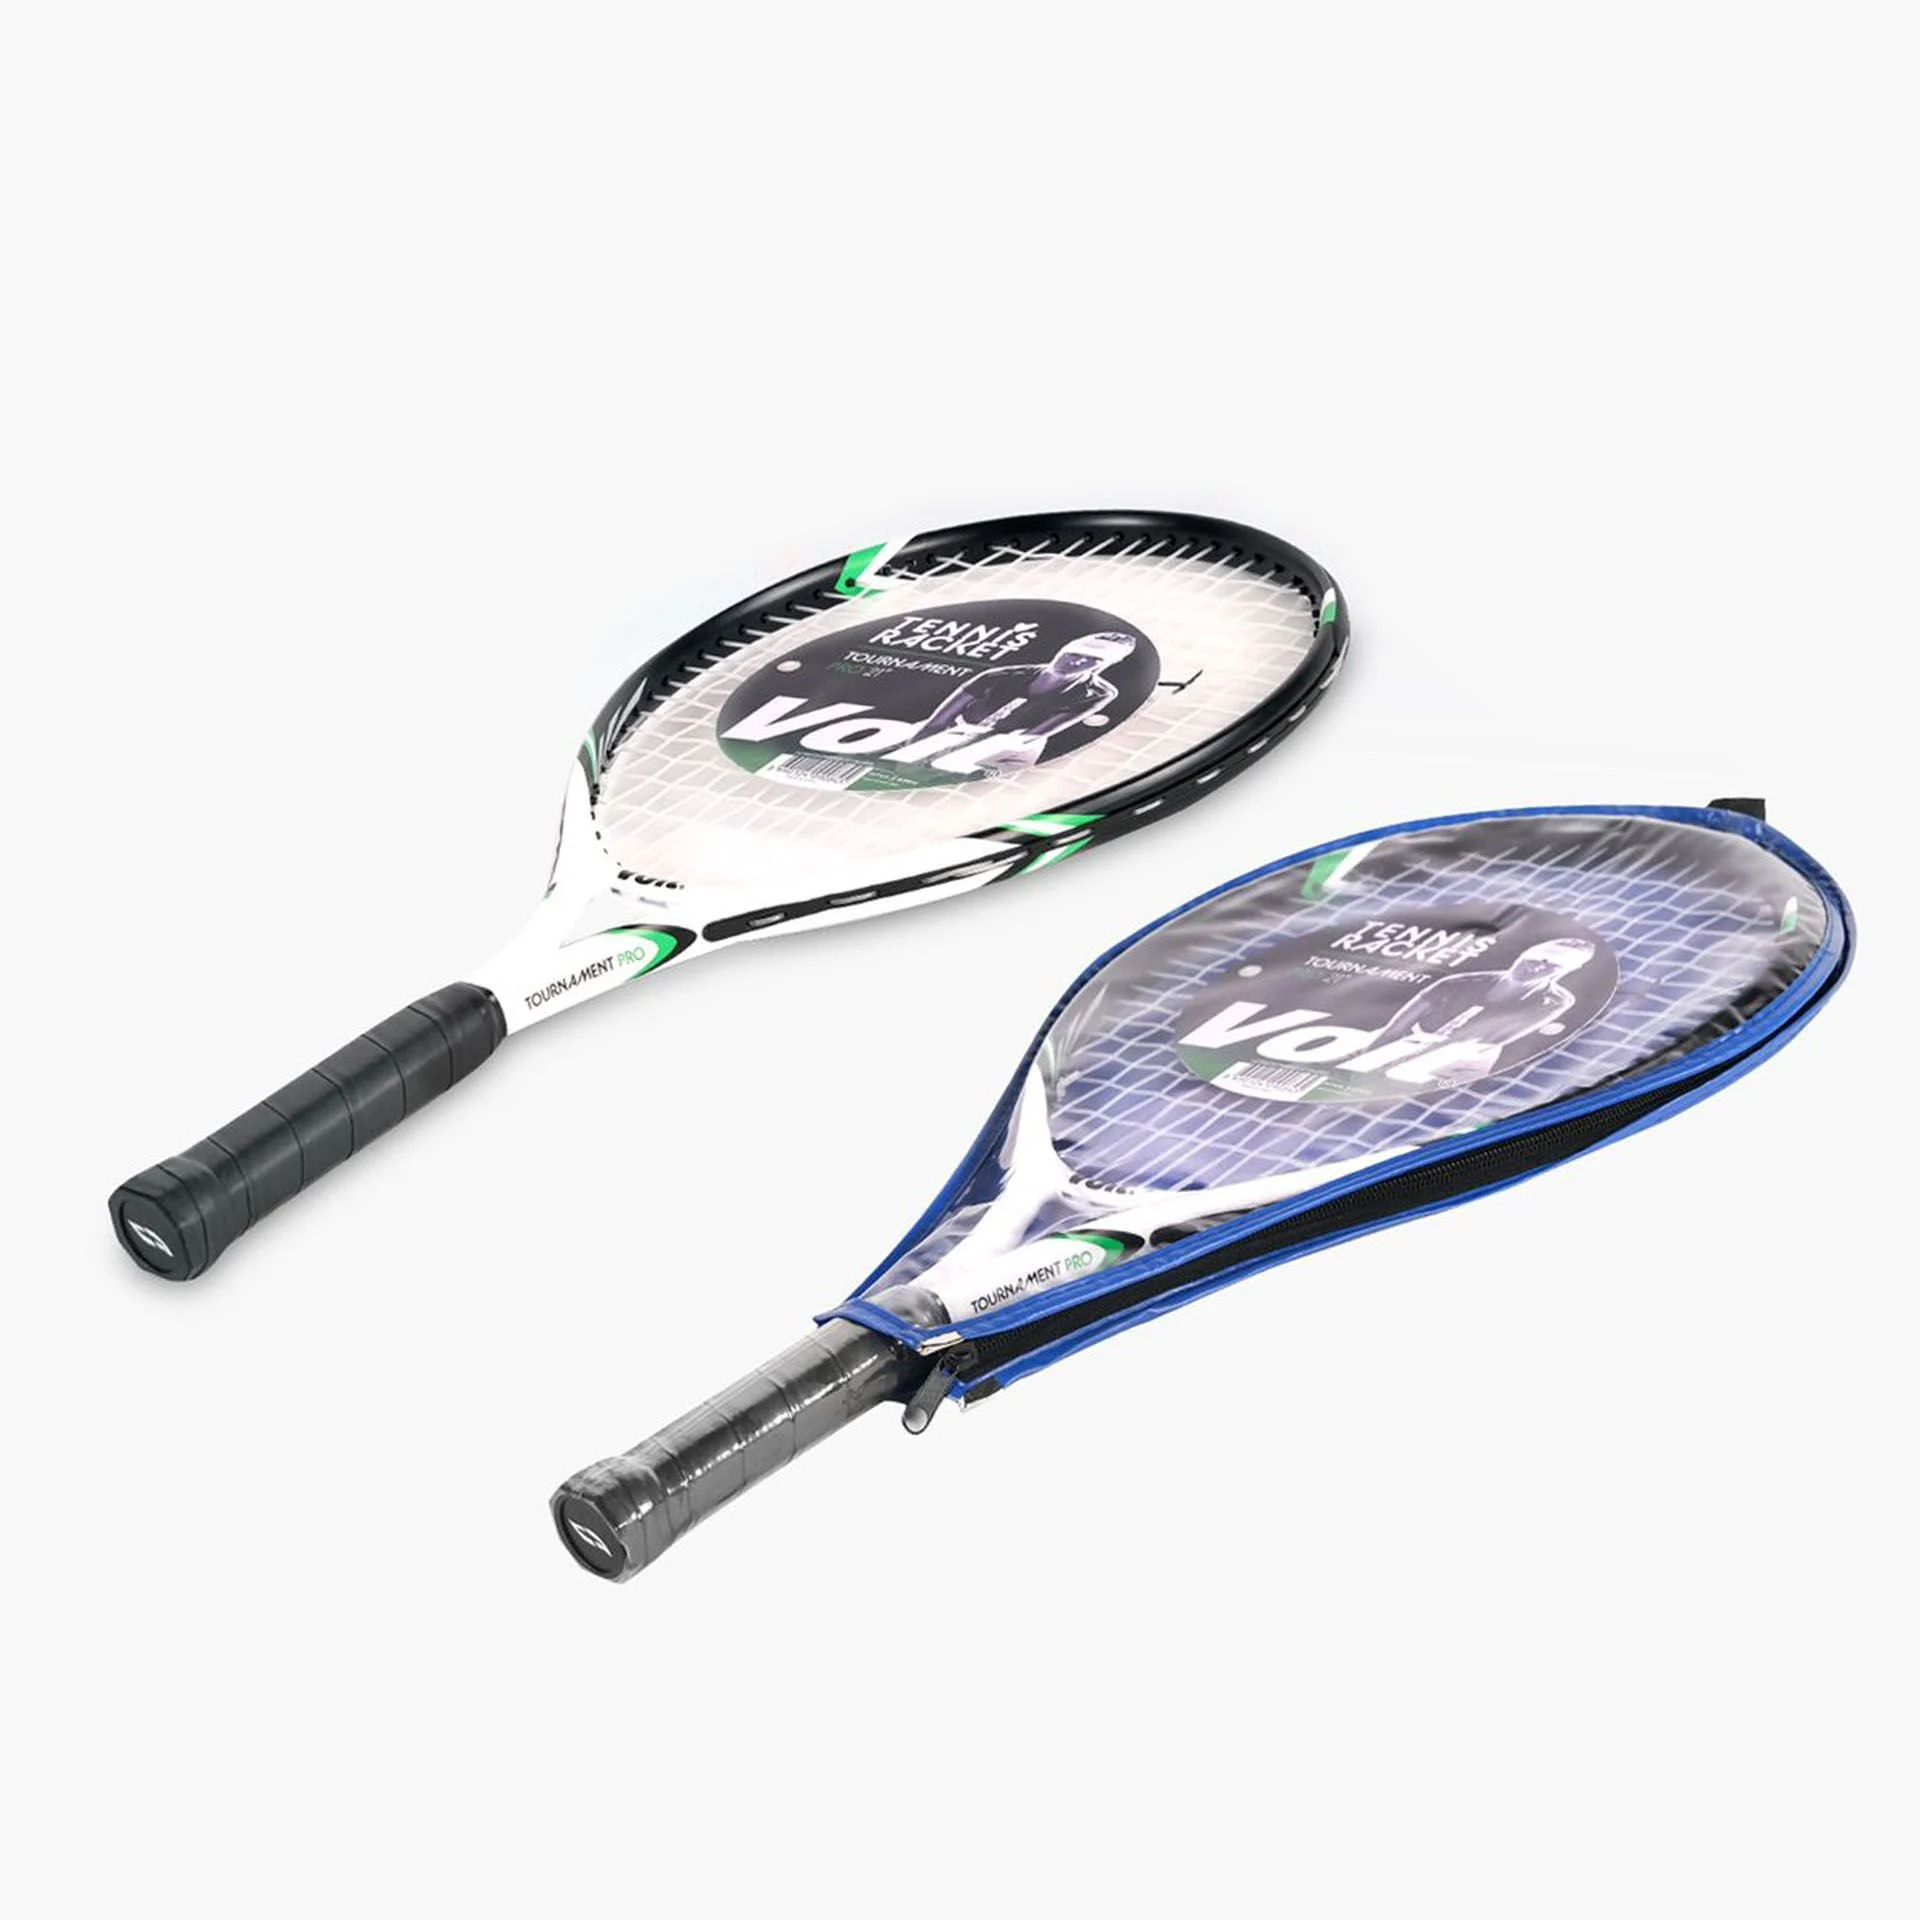 Voit Tournament Pro Tenis Raketi 21 Inch Yeşil